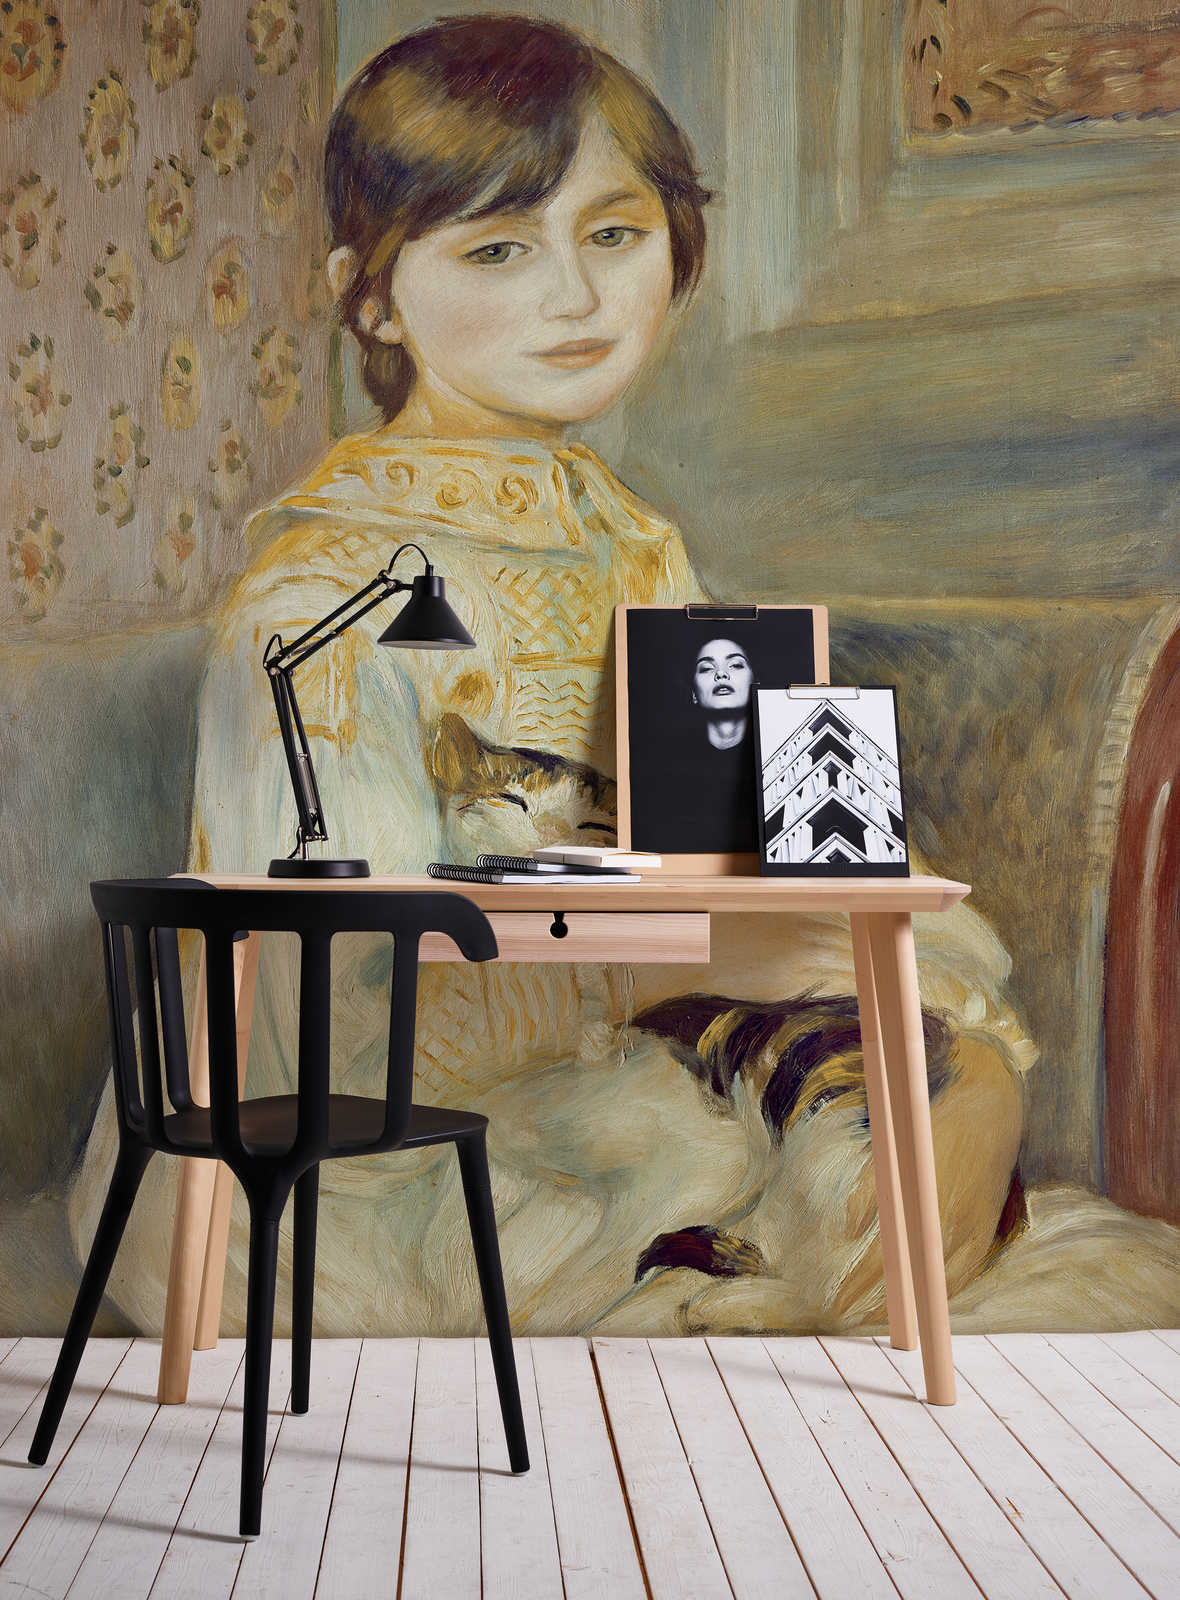             Fotomurali "Mademoiselle Julie con gatto" di Pierre Auguste Renoir
        